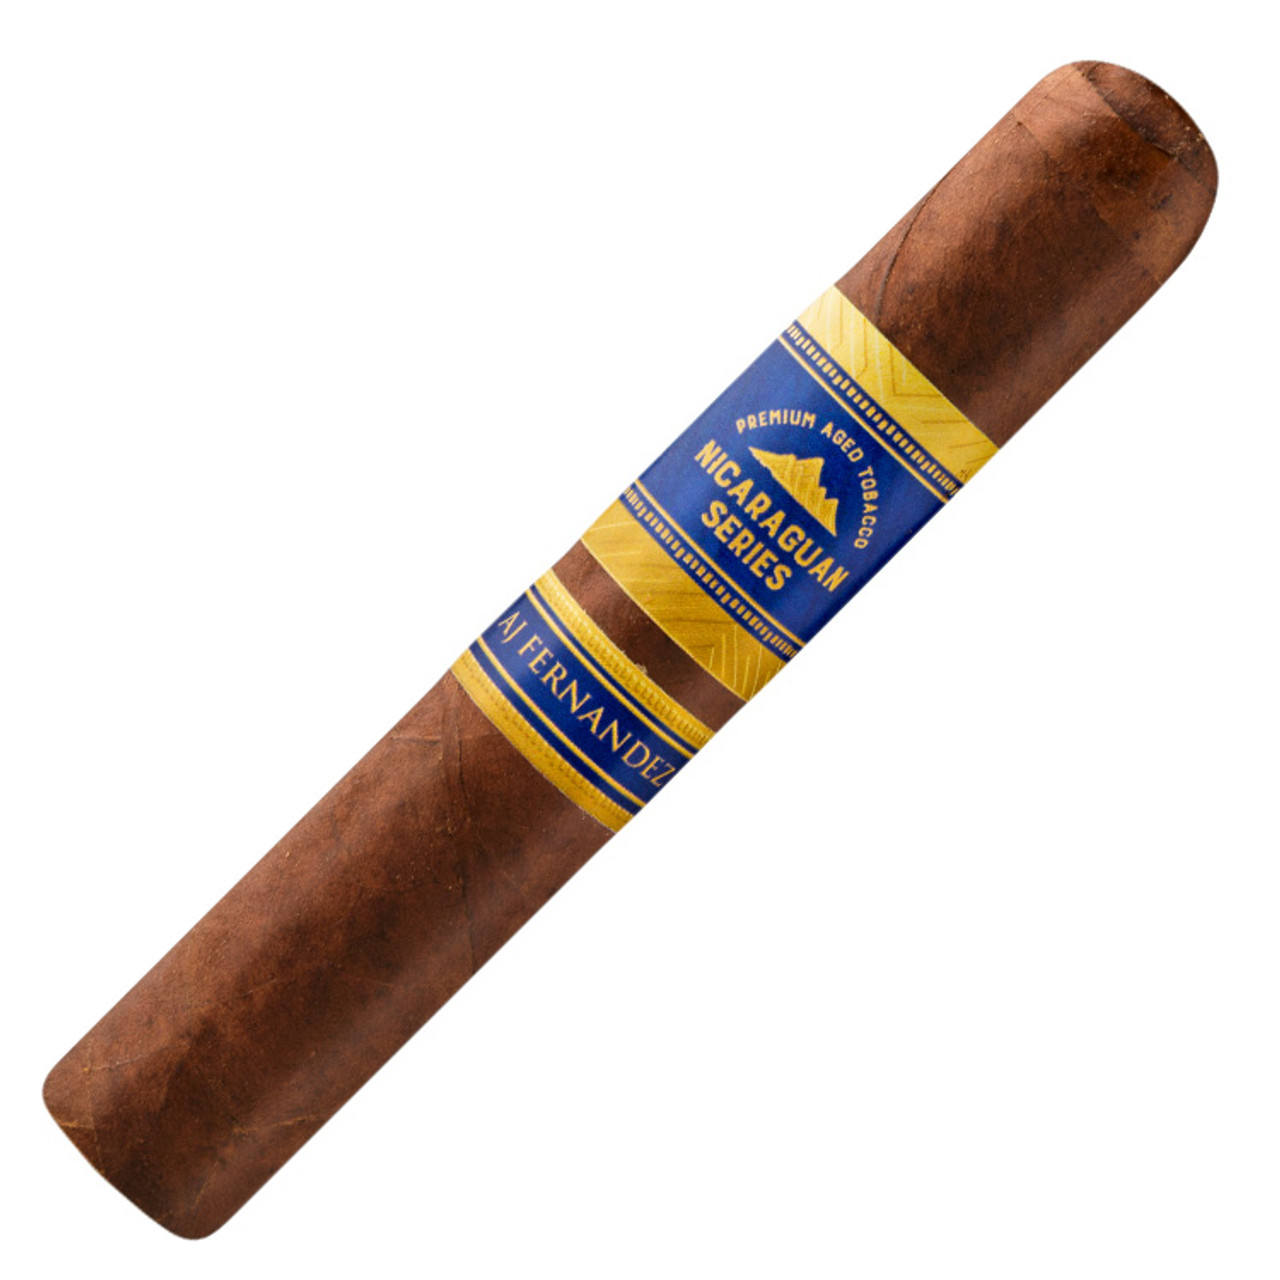 Nicaraguan Series by AJ Fernandez Robusto Cigars - 5 x 52 Single